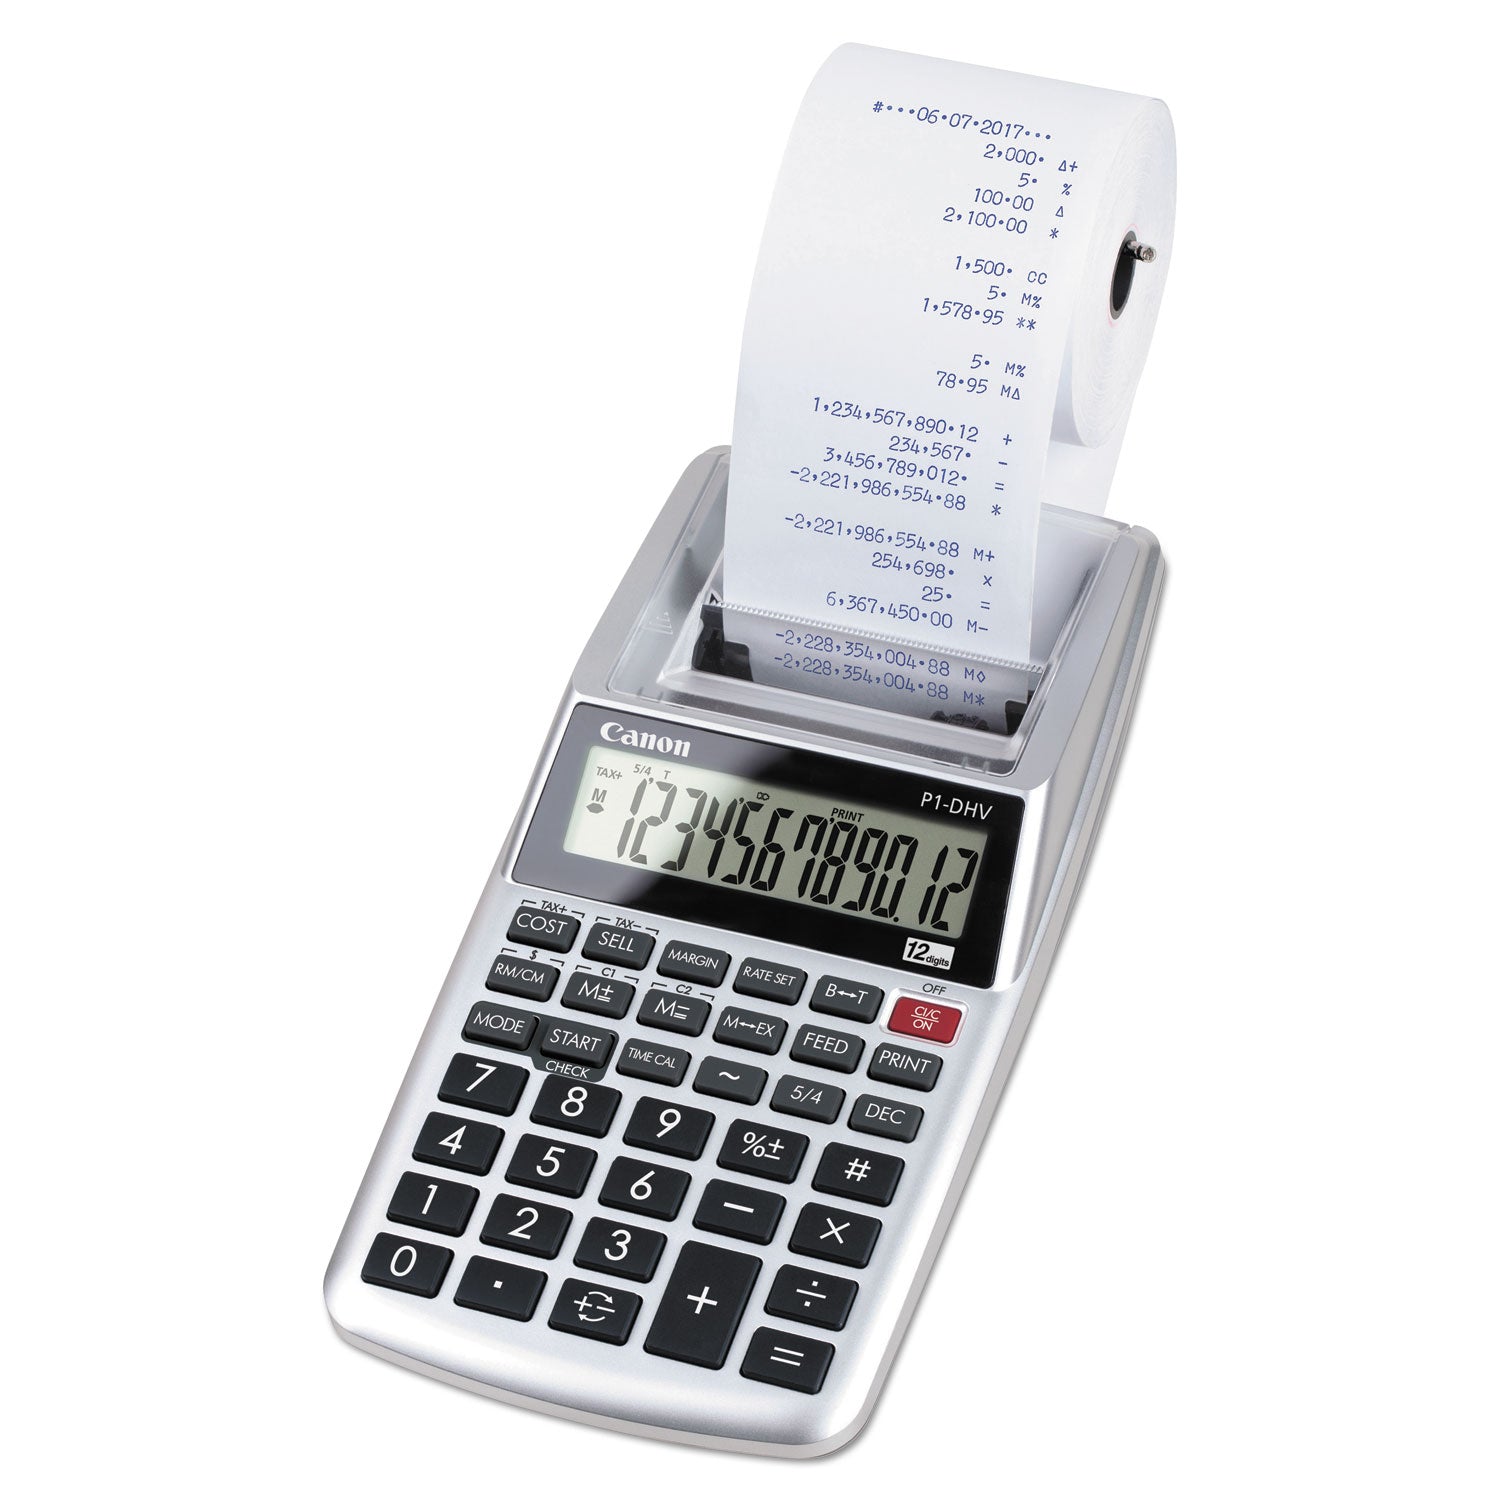 p1-dhv-12-digit-palm-printing-calculator-purple-print-2-lines-sec_cnm2203c001 - 1